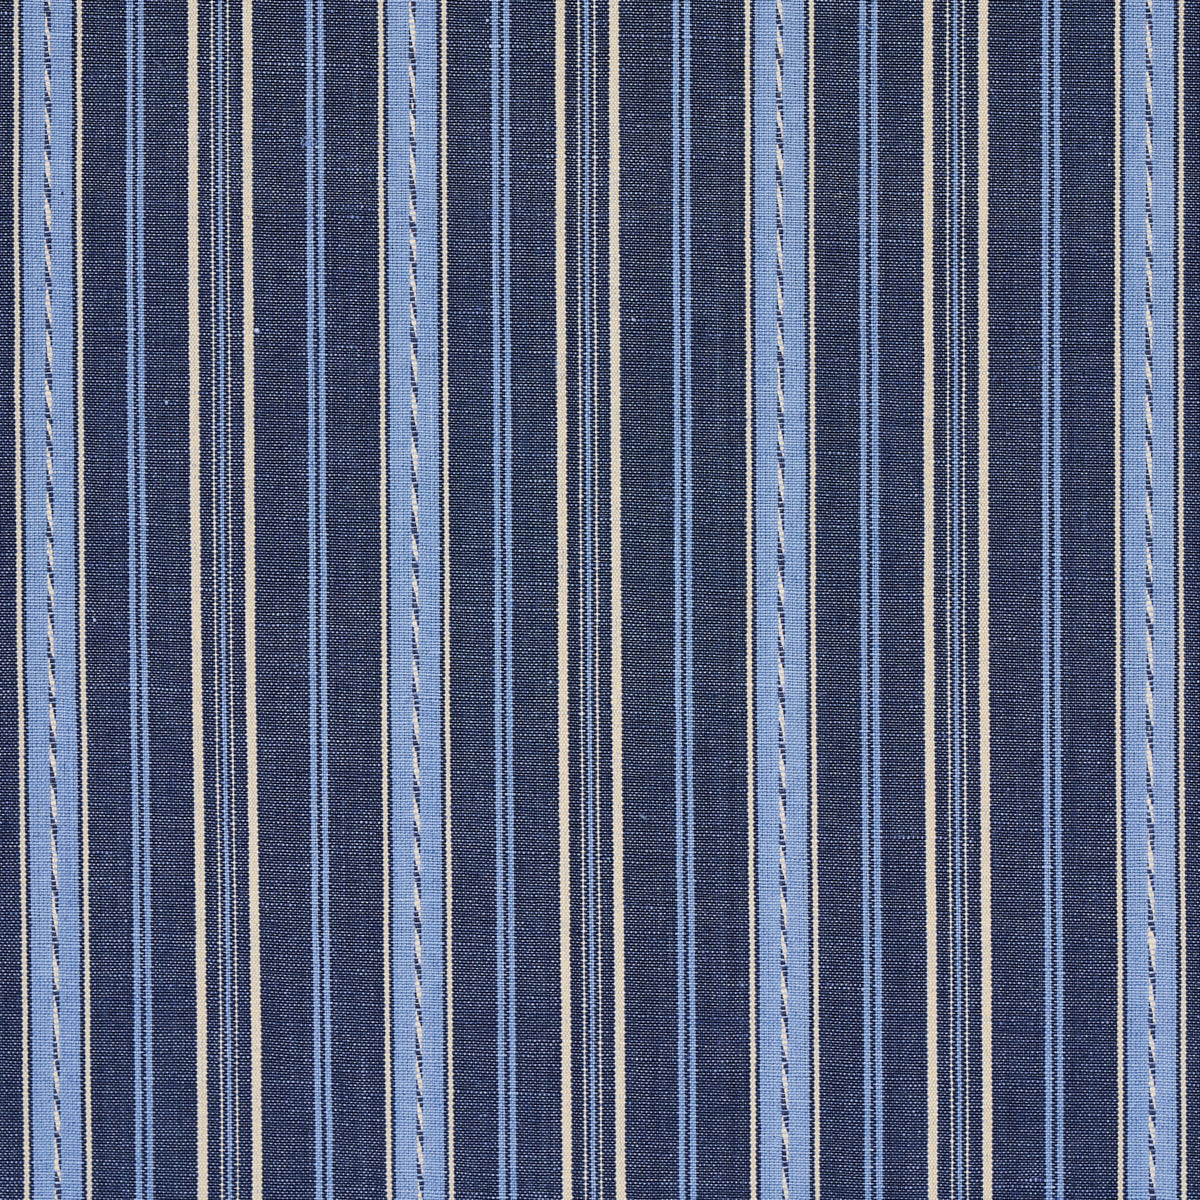 Purchase 81440 Lightfoot Stripe, Delft by Schumacher Fabric